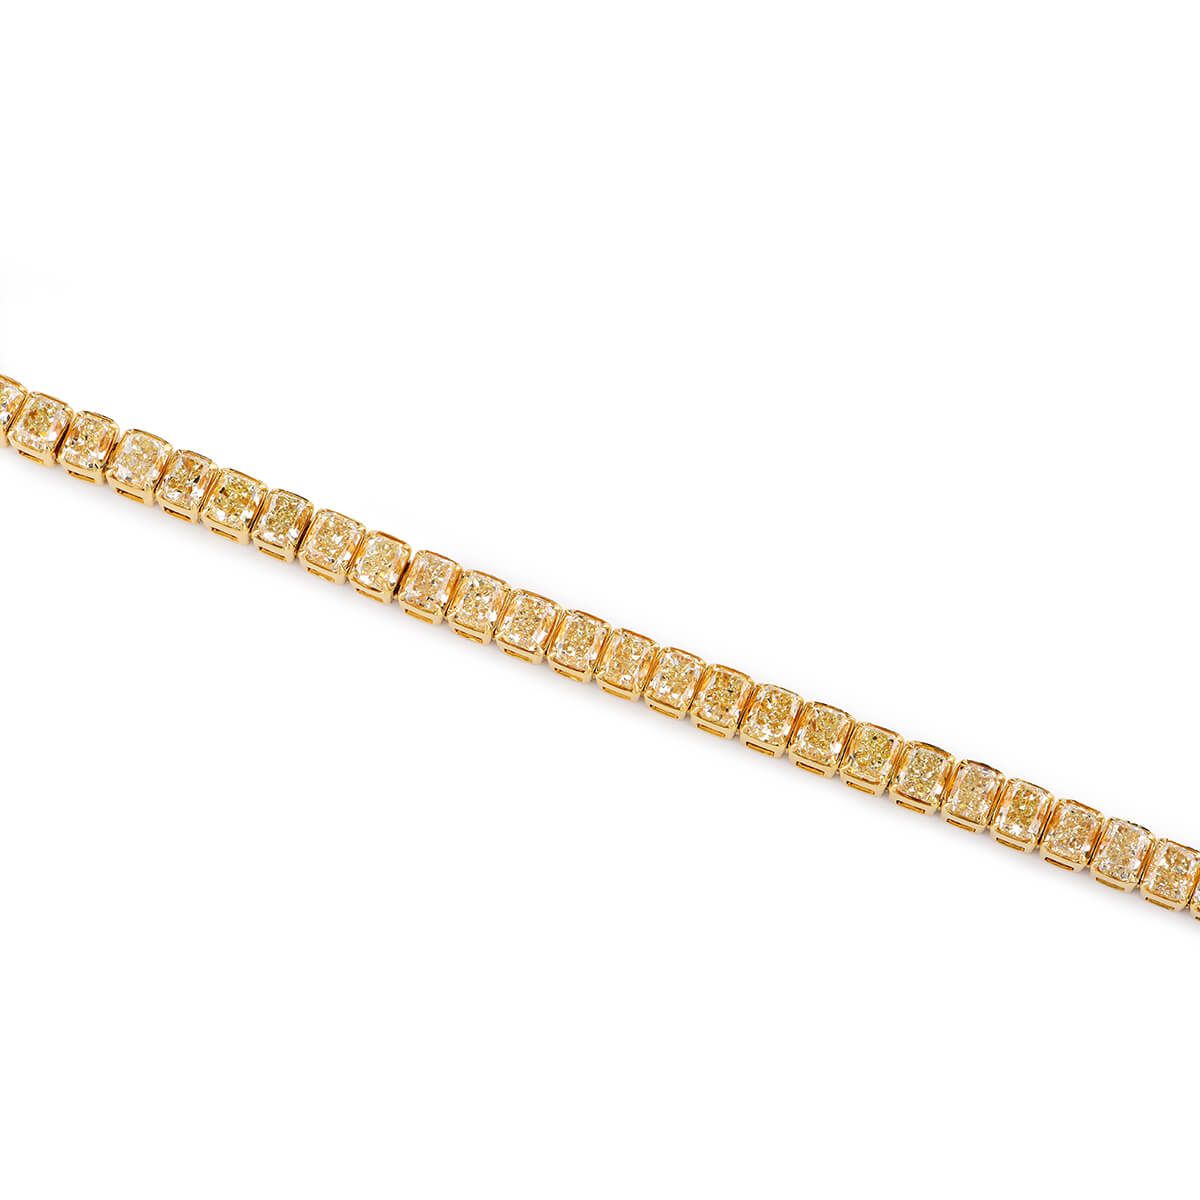 Fancy Intense Yellow Diamond Bracelet, 26.43 Ct. TW, Radiant shape